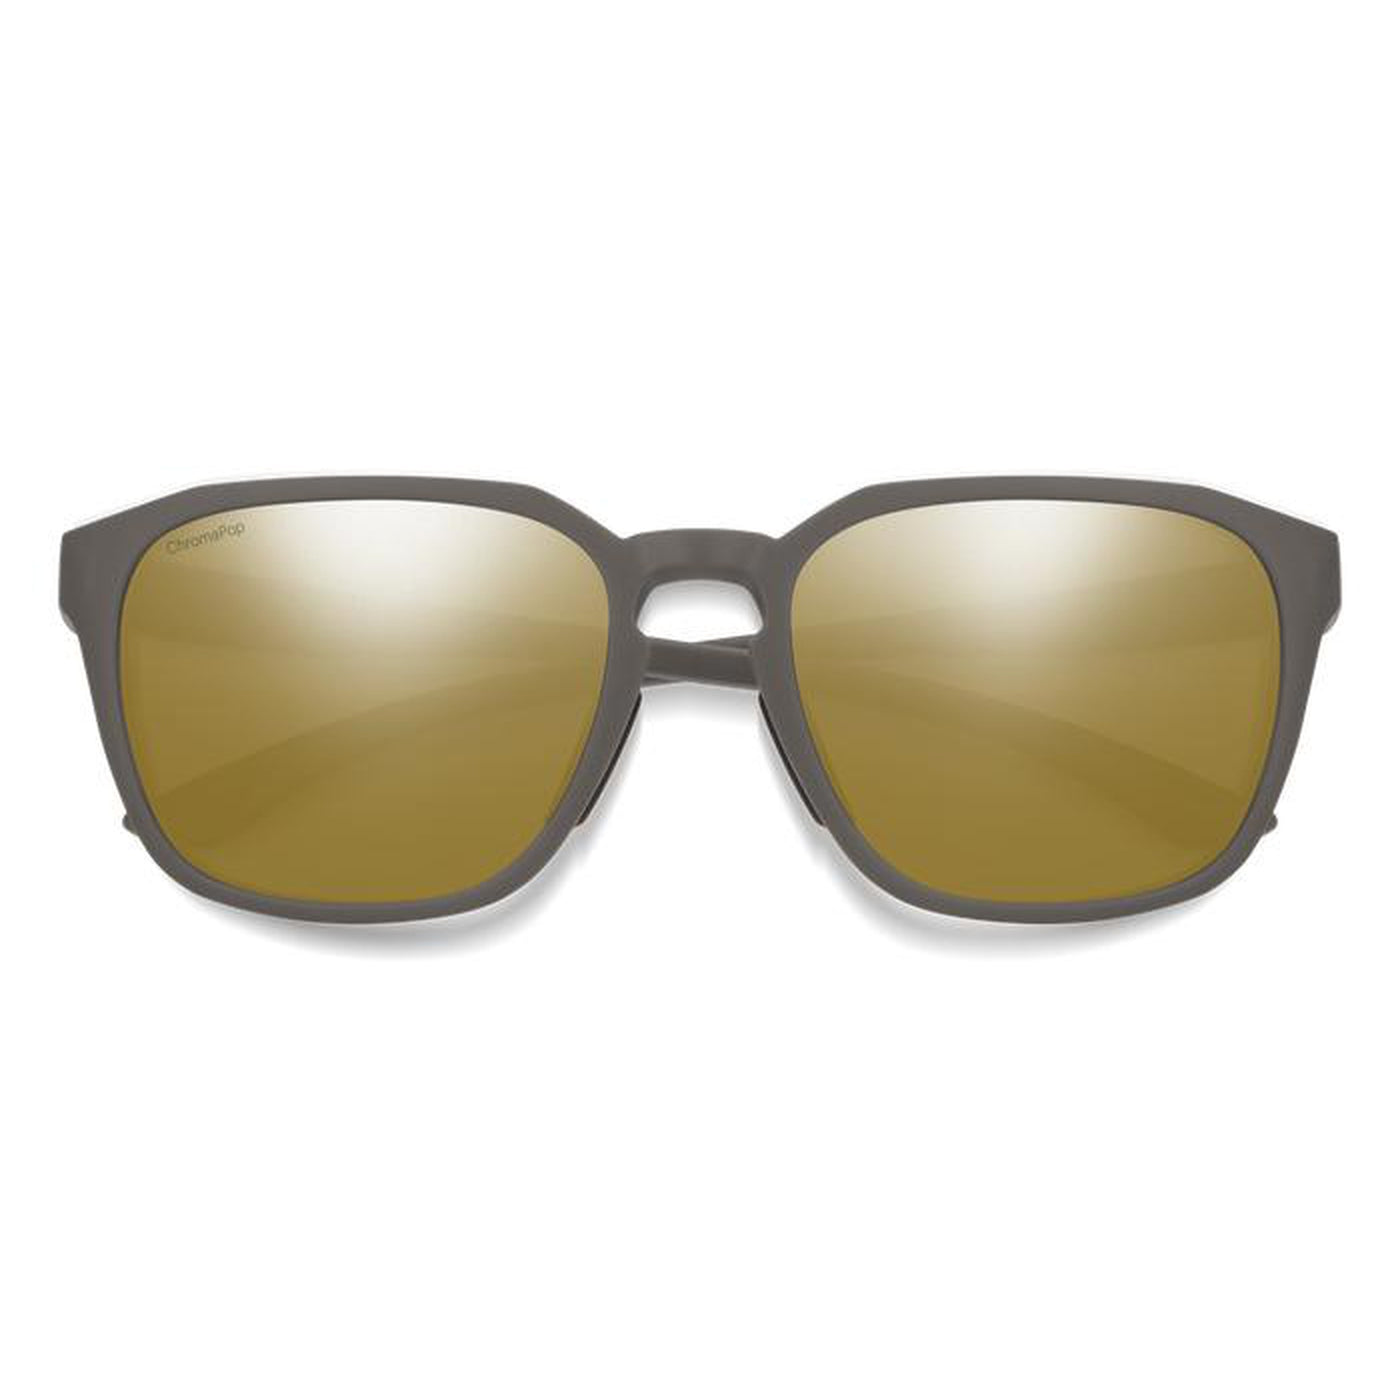 Smith Contour-Polarized Sunglasses-Topline Eyewear